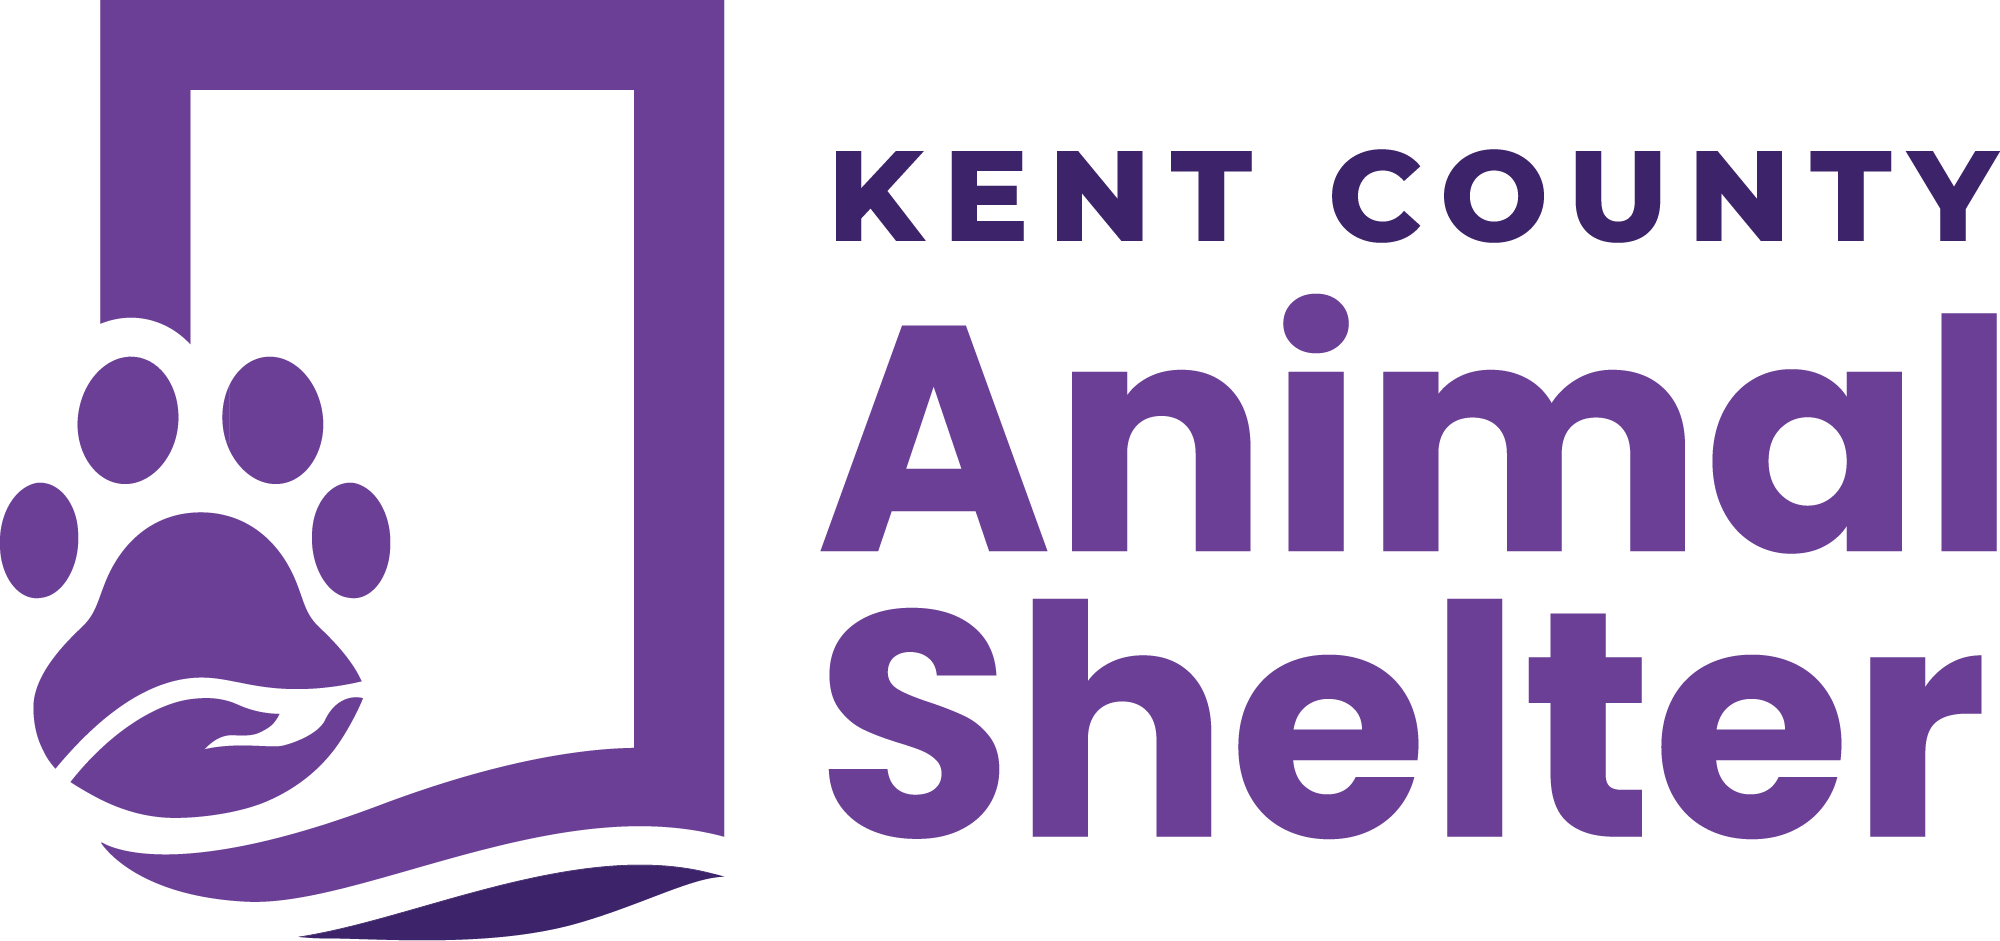 Kent County Animal Shelter logo